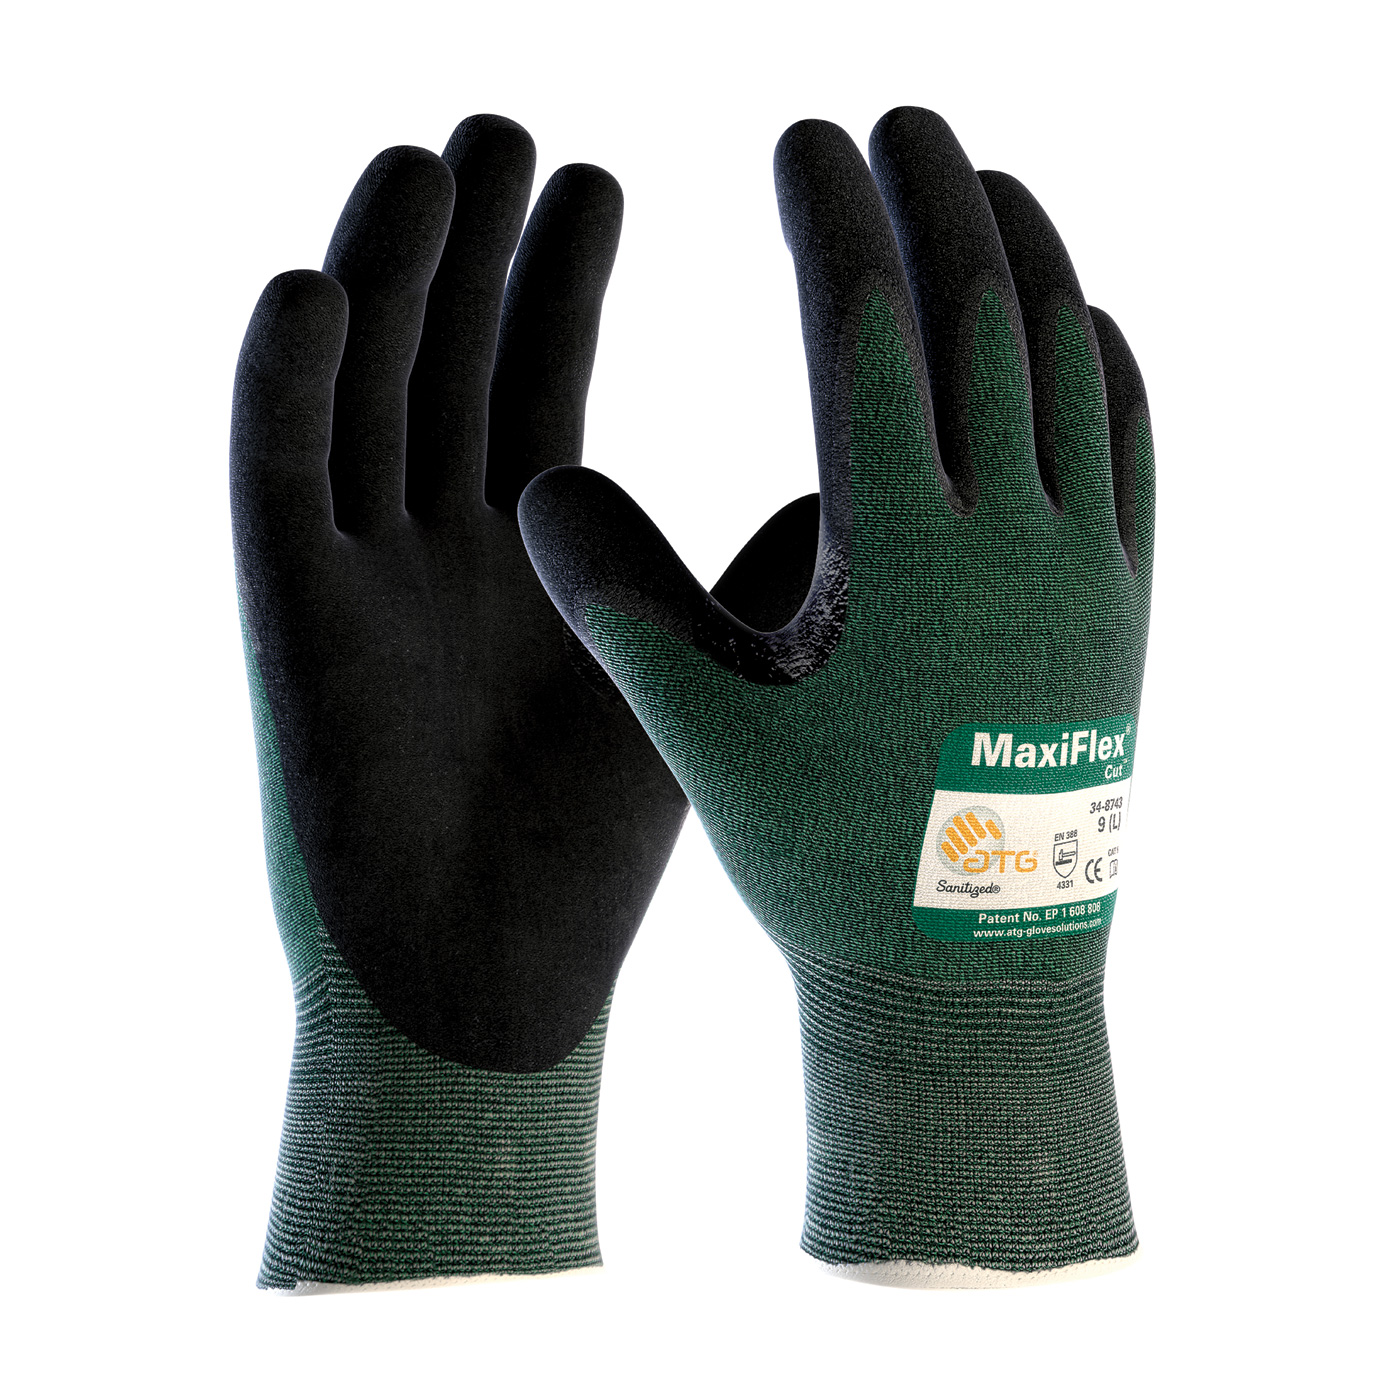 PIP 34-8743/XXL MaxiFlex Cut Seamless Knit Engineered Yarn Glove with Premium Nitrile Coated MicroFoam Grip on Palm & Fingers - 2X-Large PID-34 8743 2X